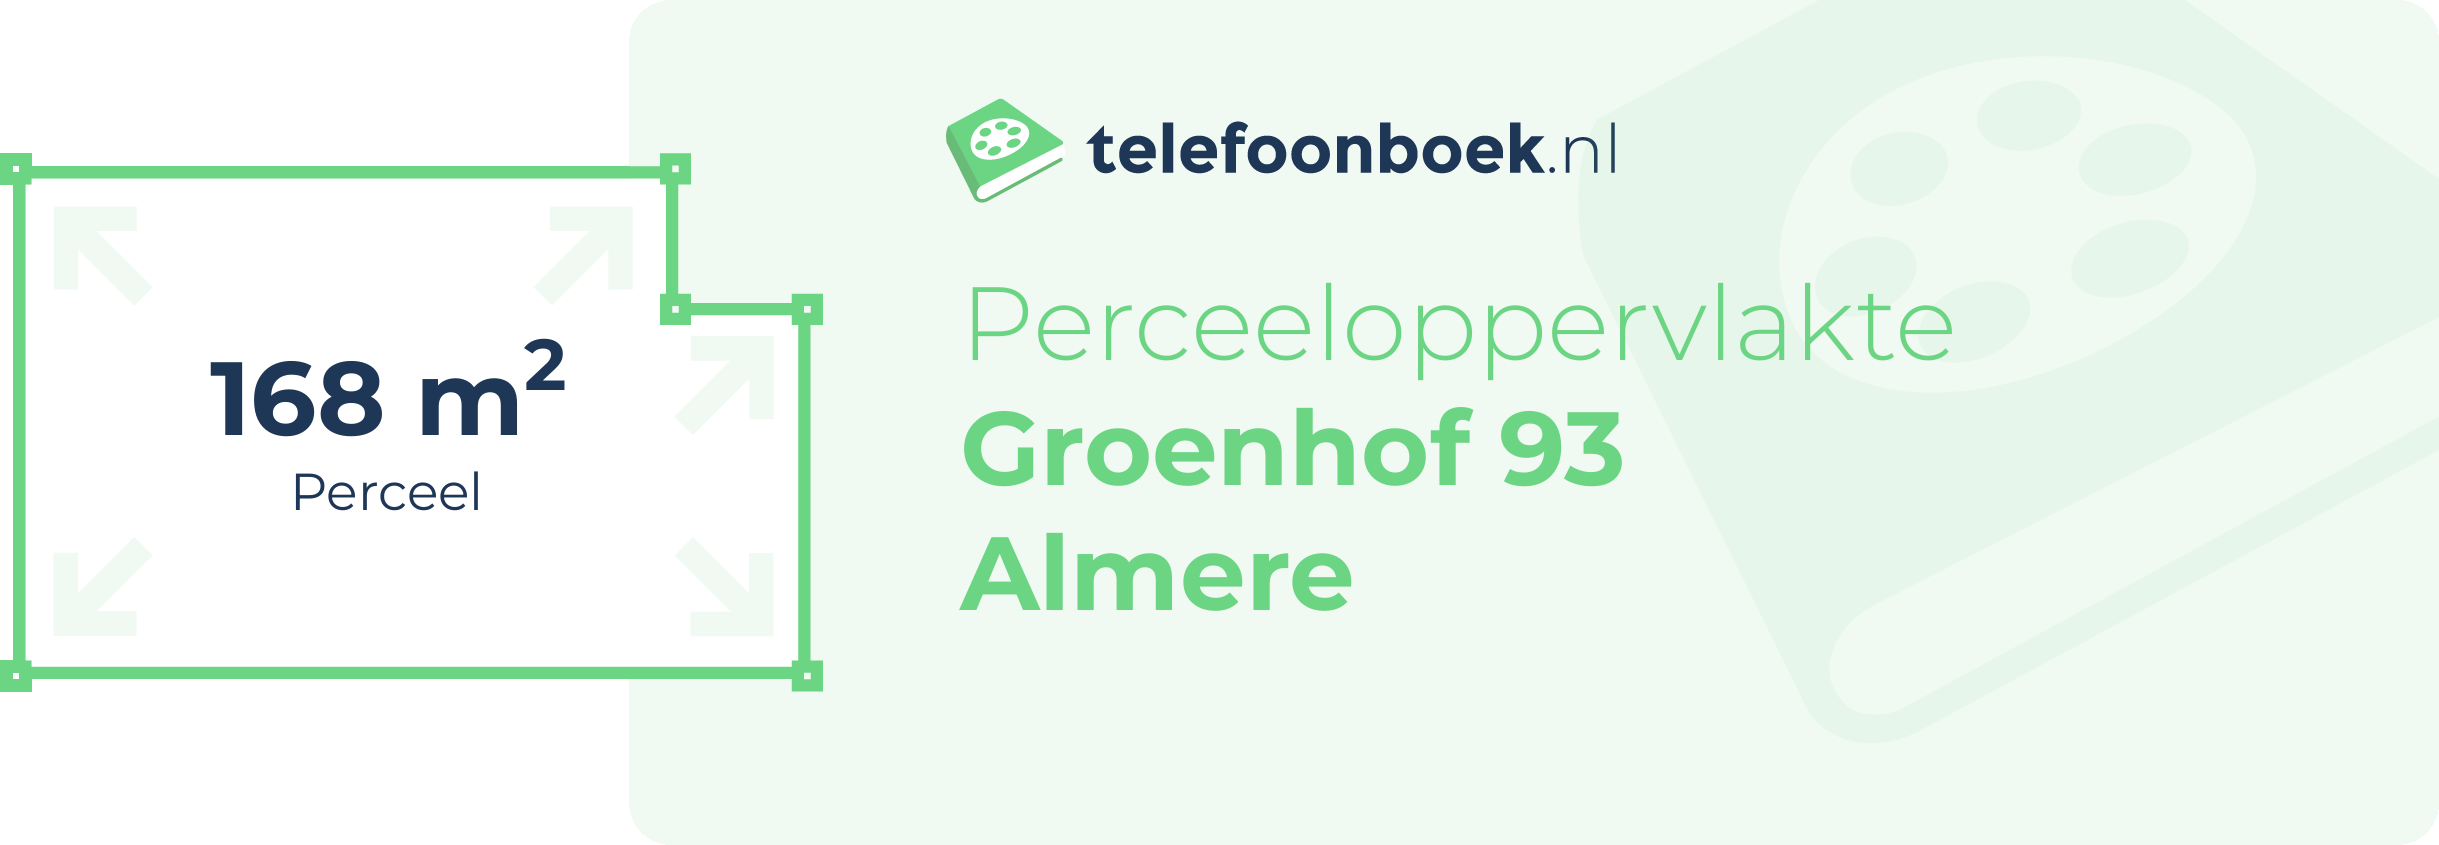 Perceeloppervlakte Groenhof 93 Almere